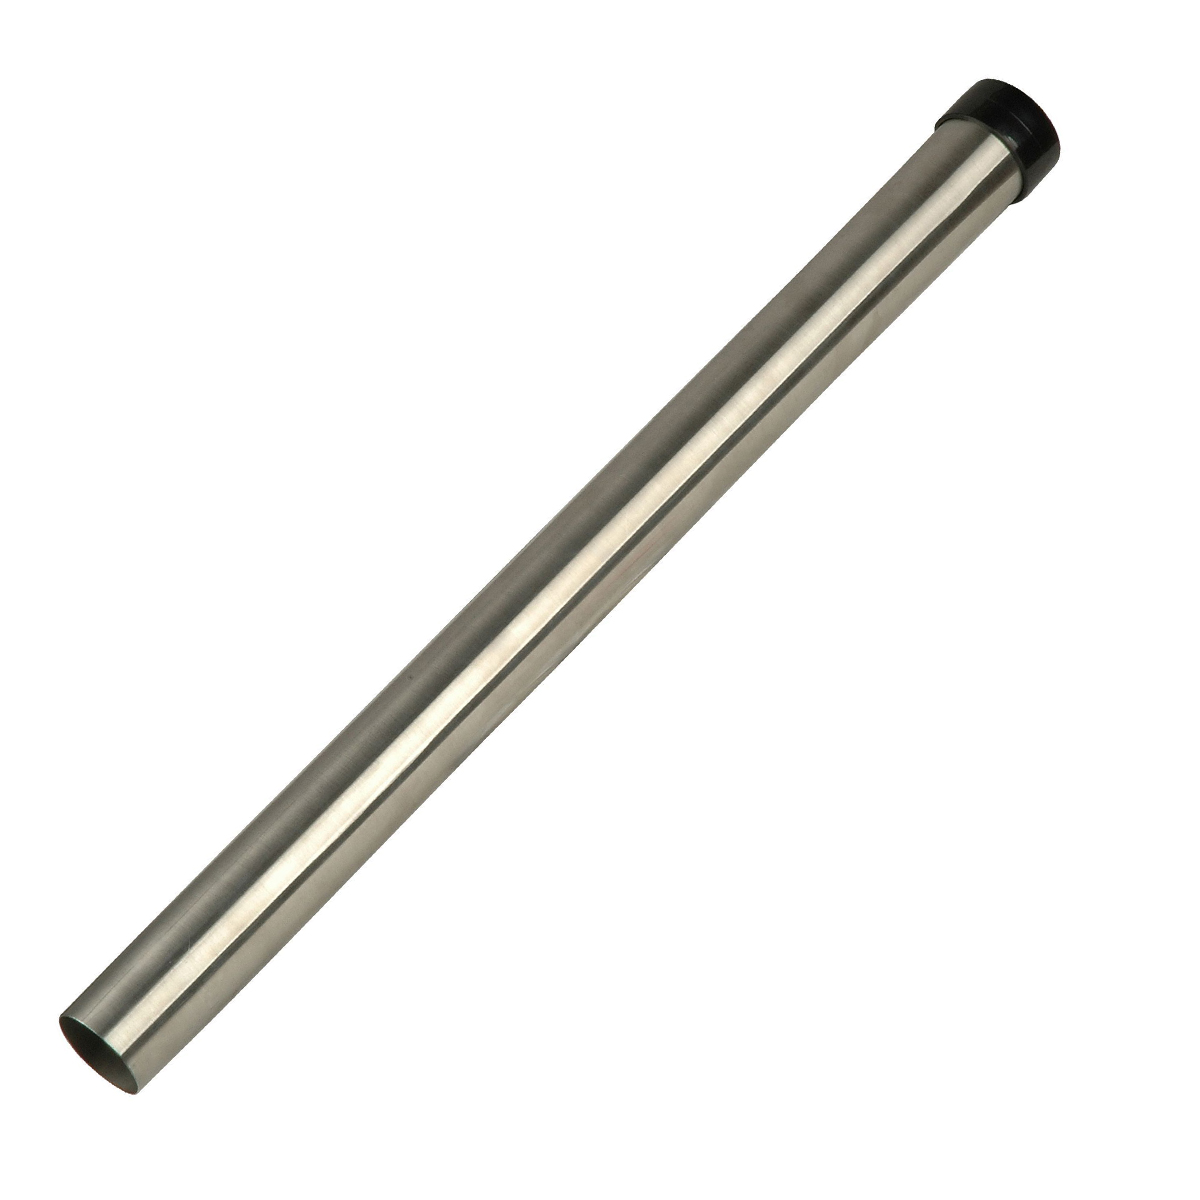 Vacuum Cleaner Tube Of Metal Stainless Steel Pipe/Tube Of Diameter 32/35/38/40mm,Vacuum Cleaner Parts/Accessories (TSB-03)